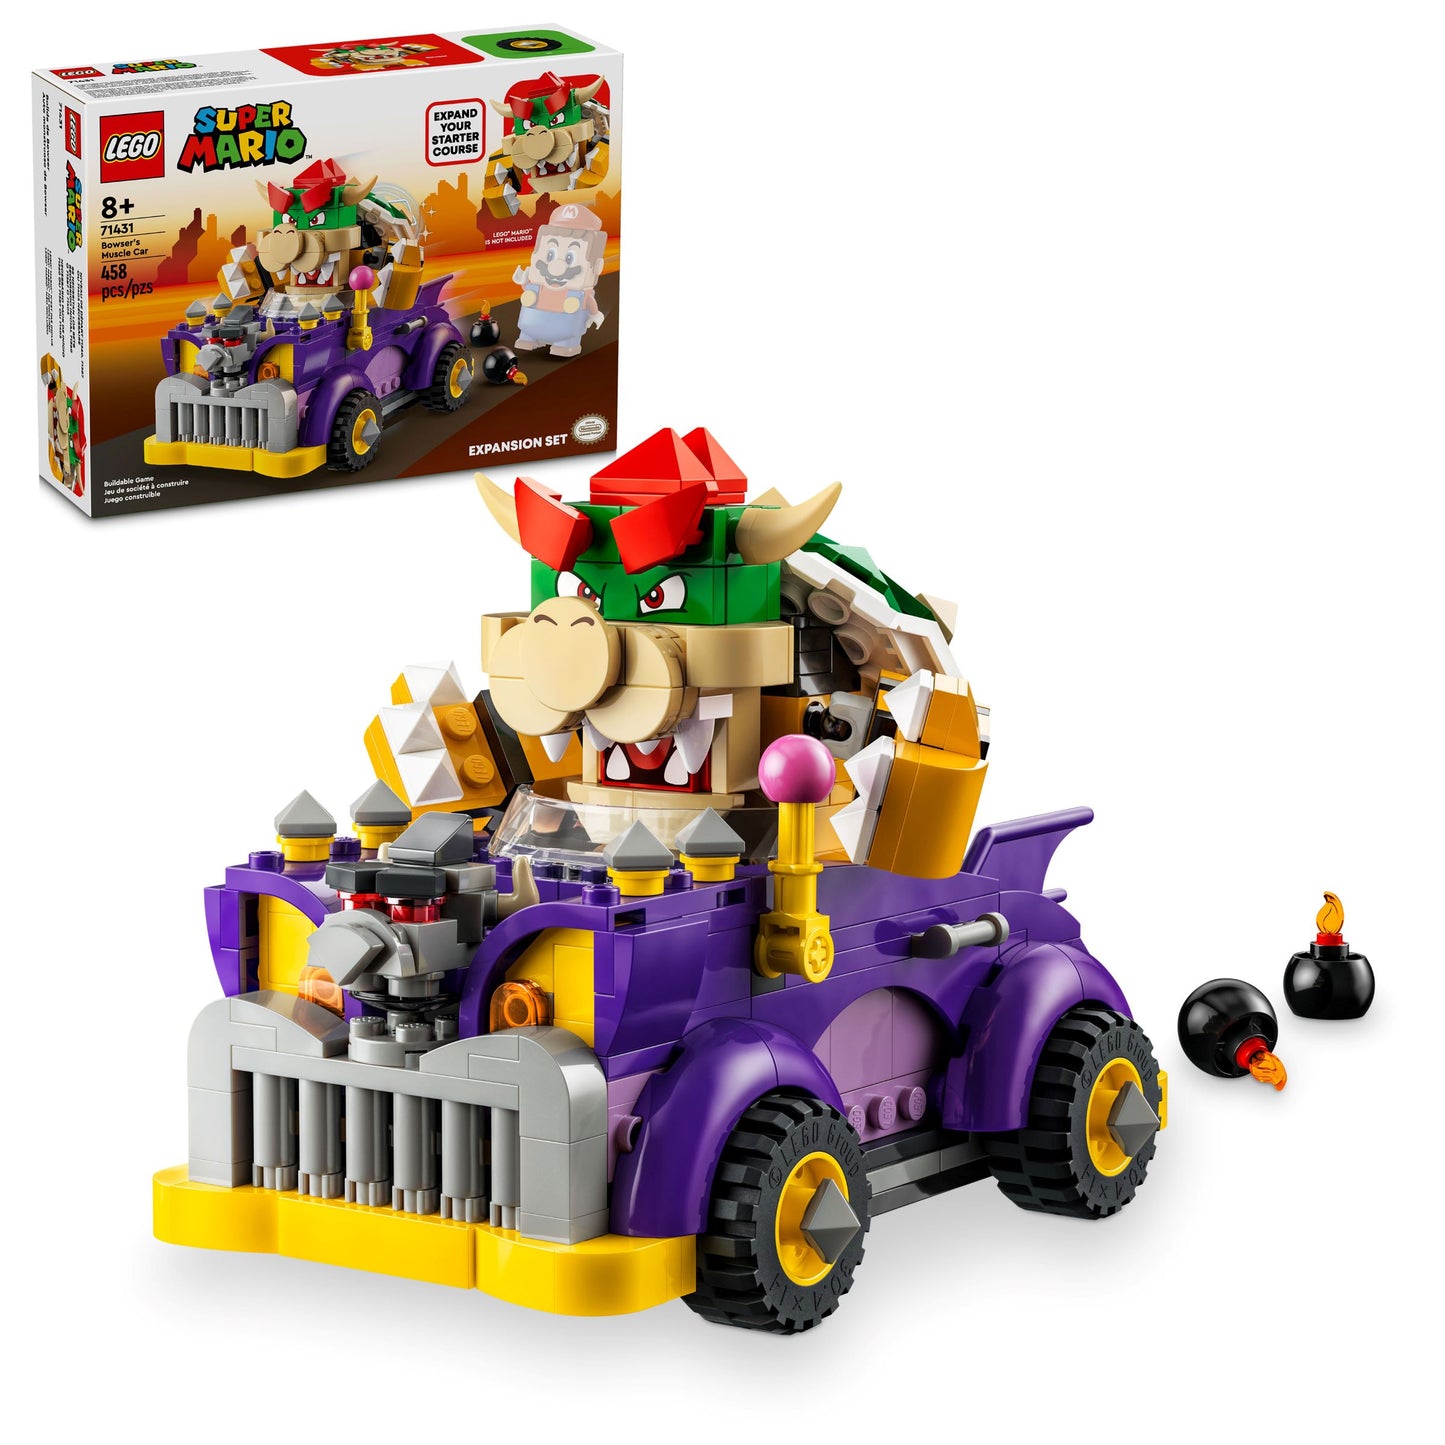 Expansion set: Bowser's car LEGO 71431